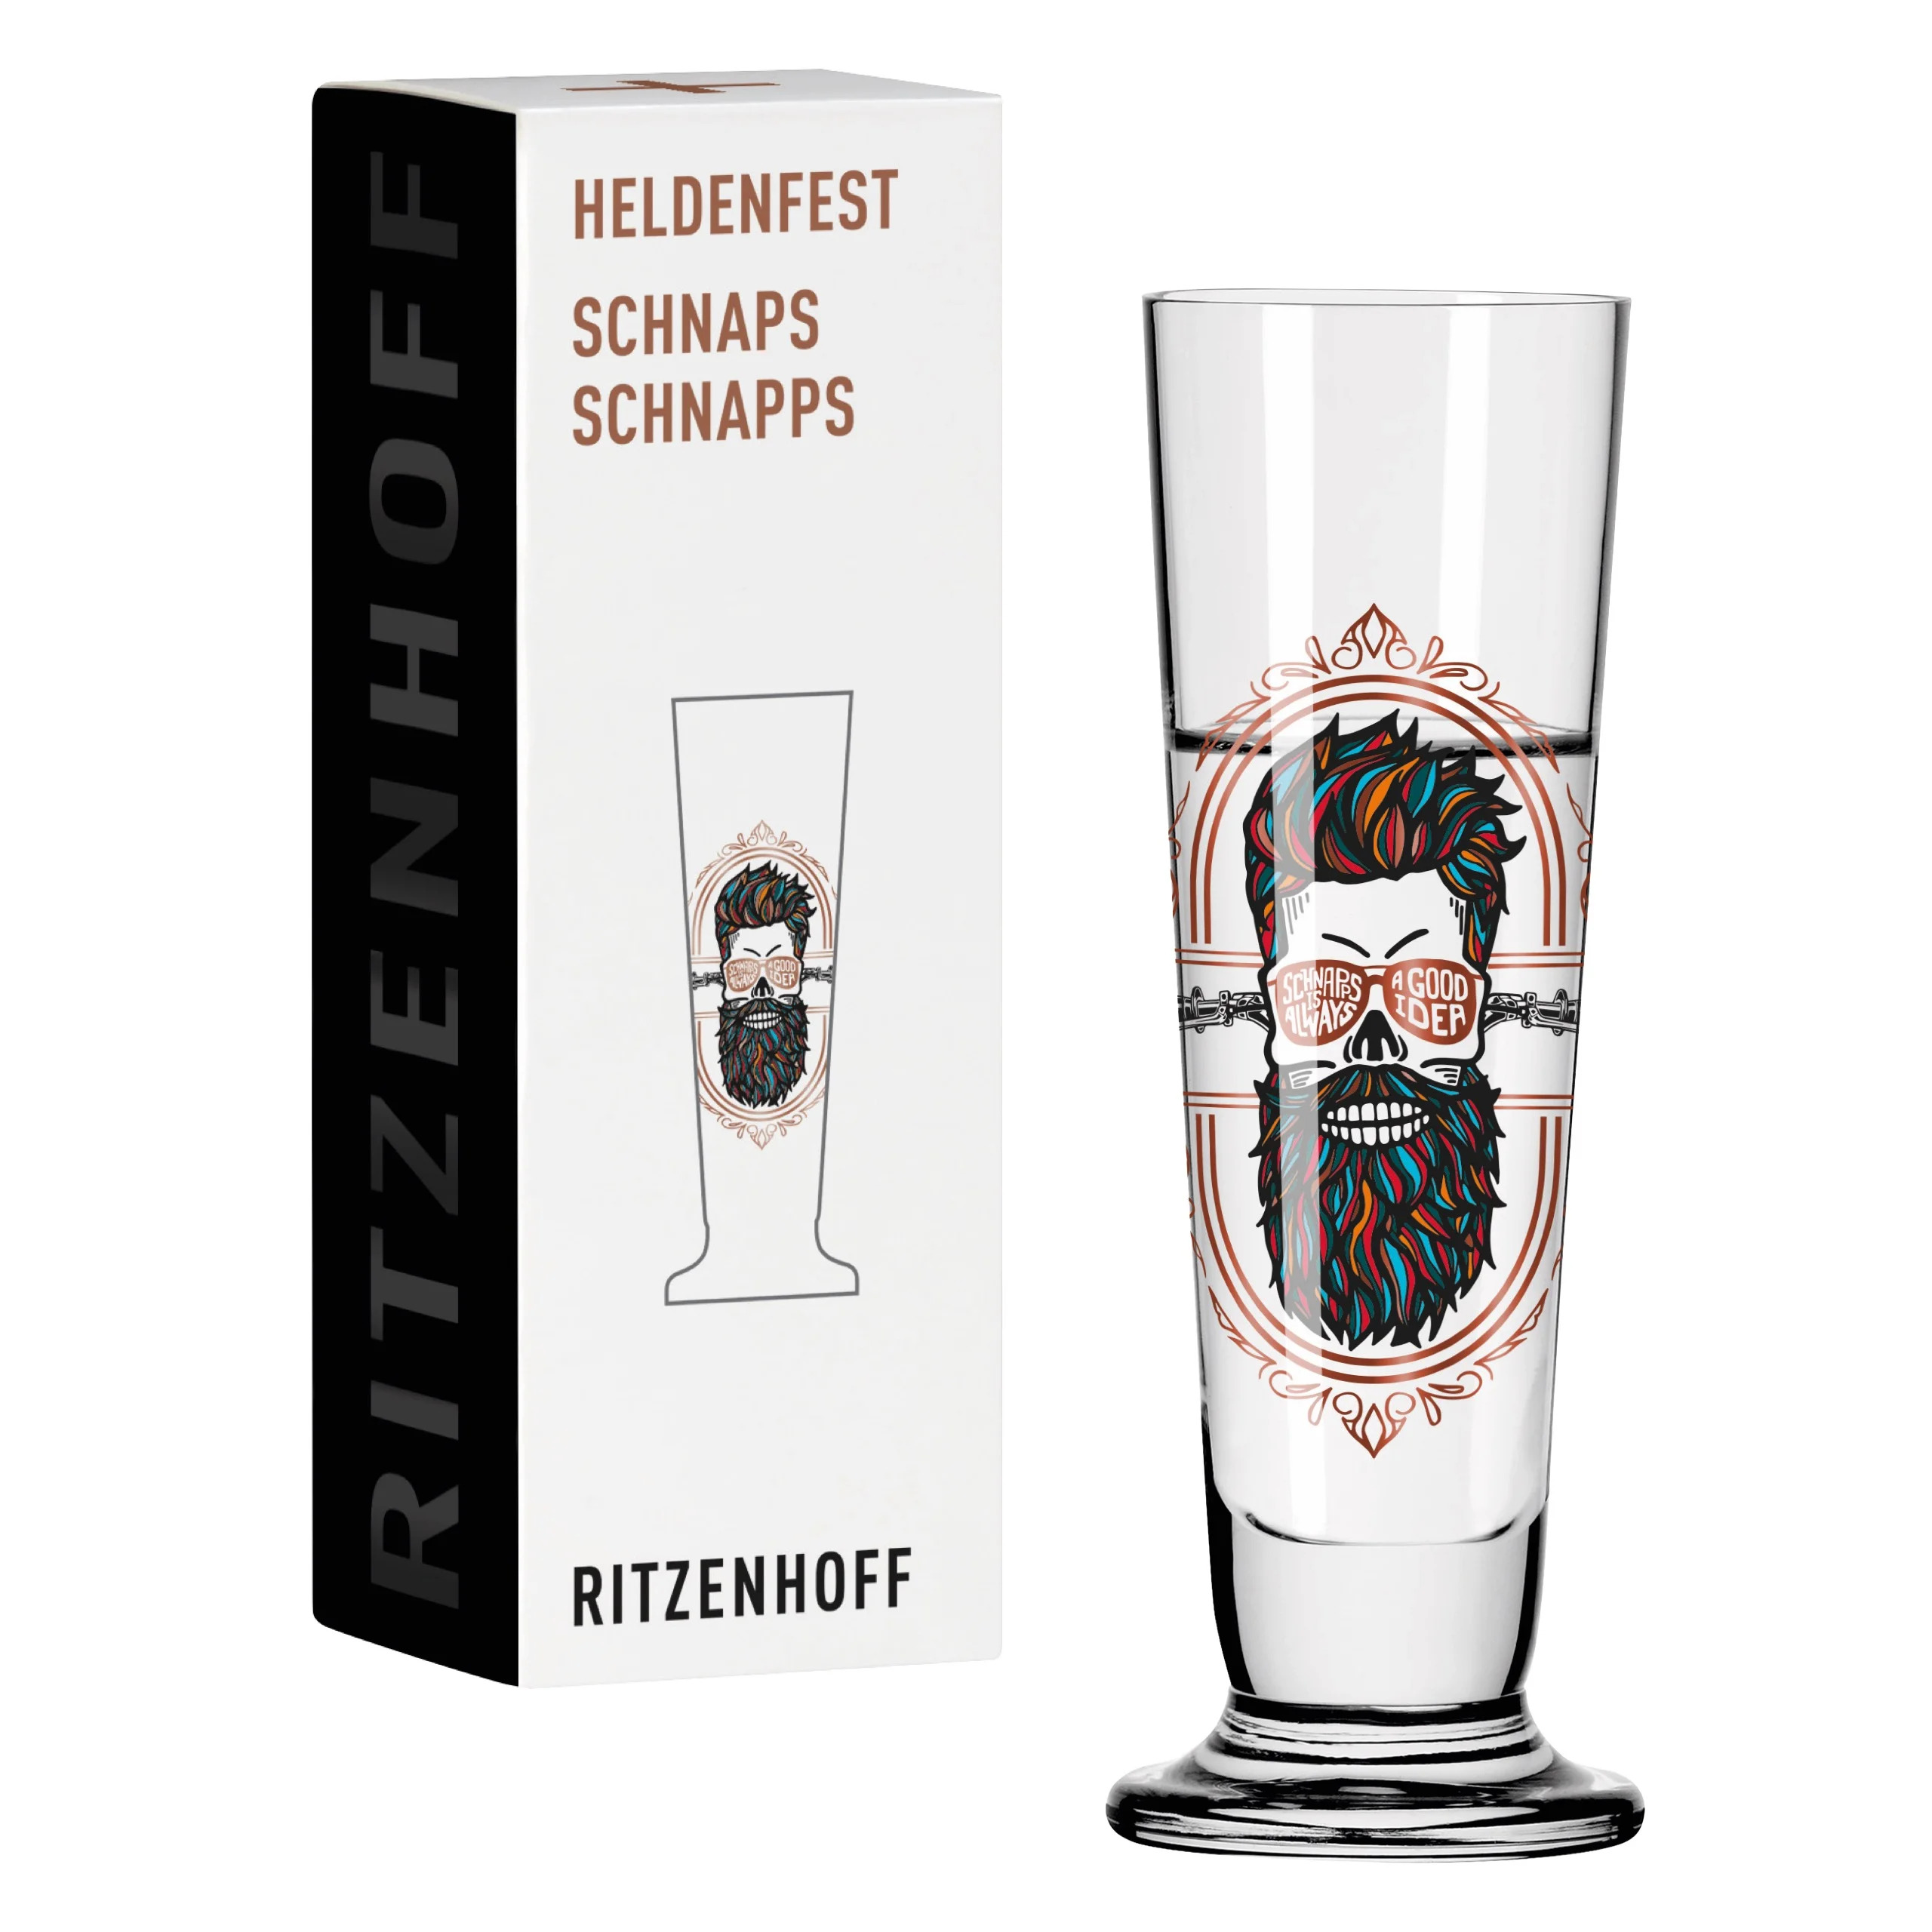 Ritzenhoff Heldenfest Schnapps Glass Sevillano